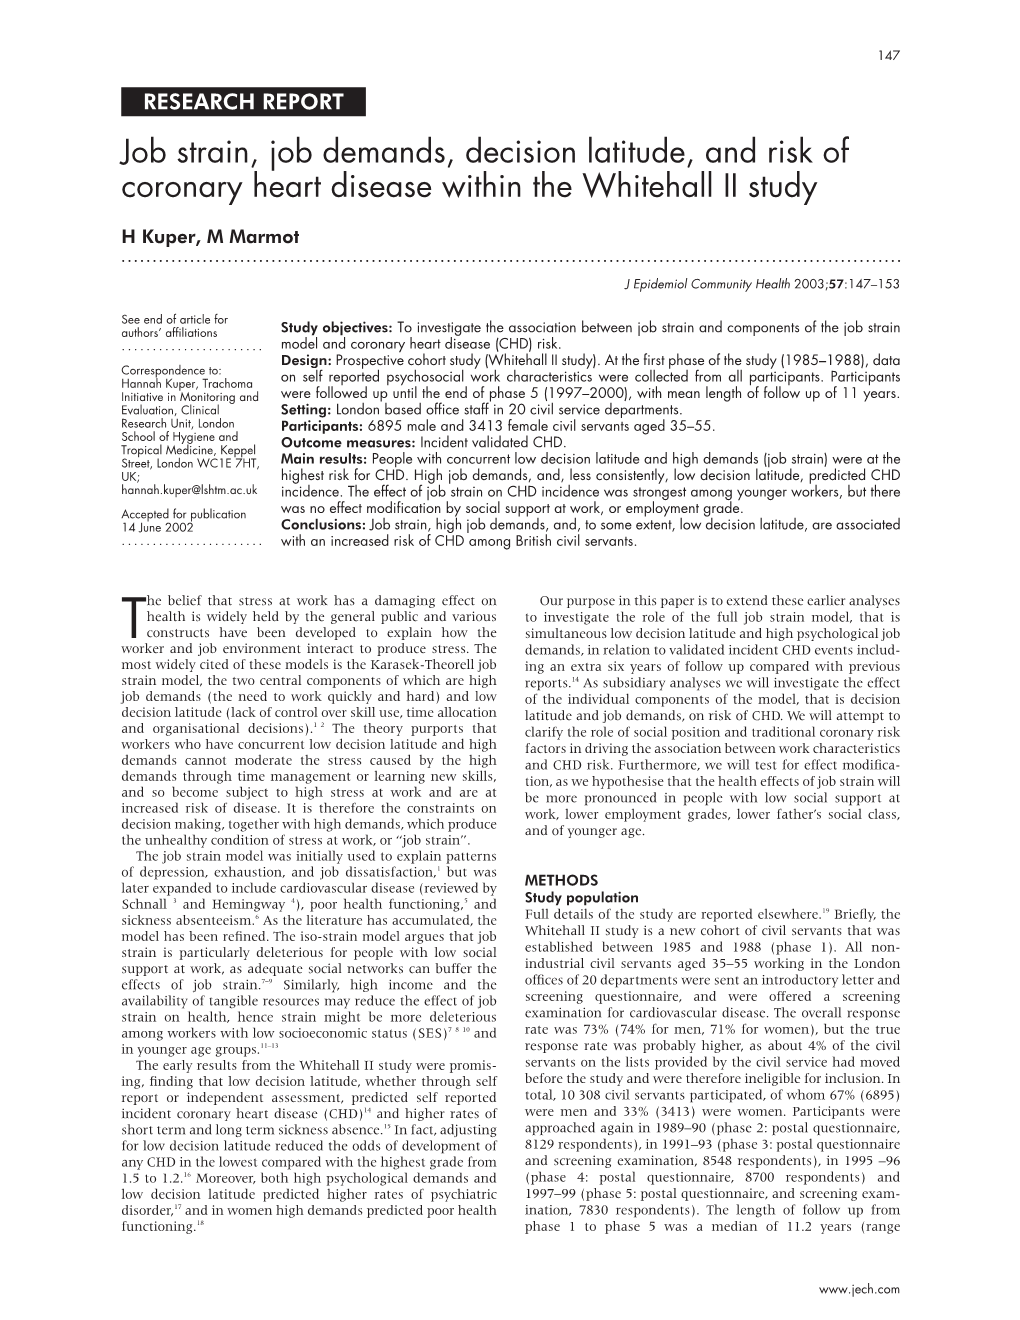 Job Strain, Job Demands, Decision Latitude, and Risk of Coronary Heart Disease Within the Whitehall II Study